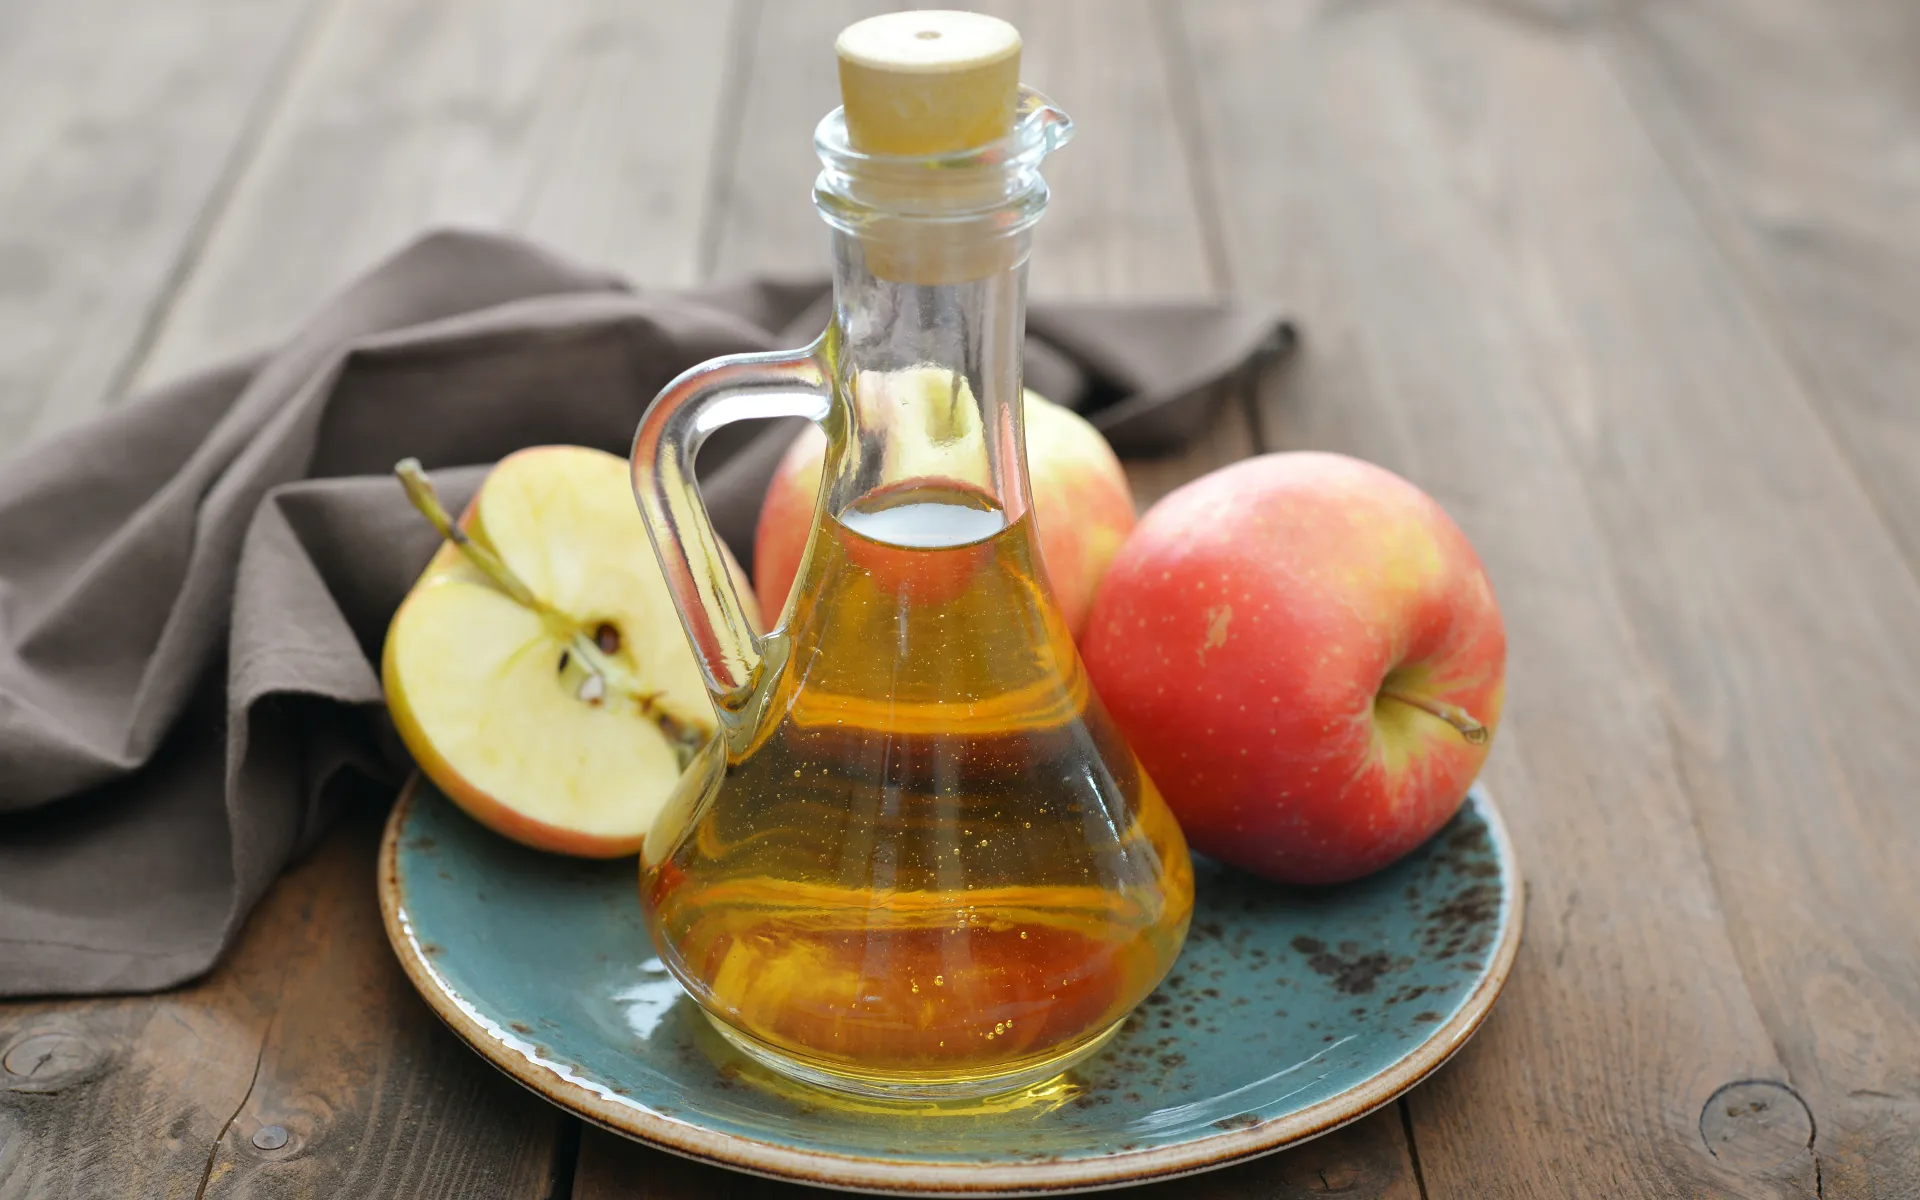 25 Uses for Apple Cider Vinegar